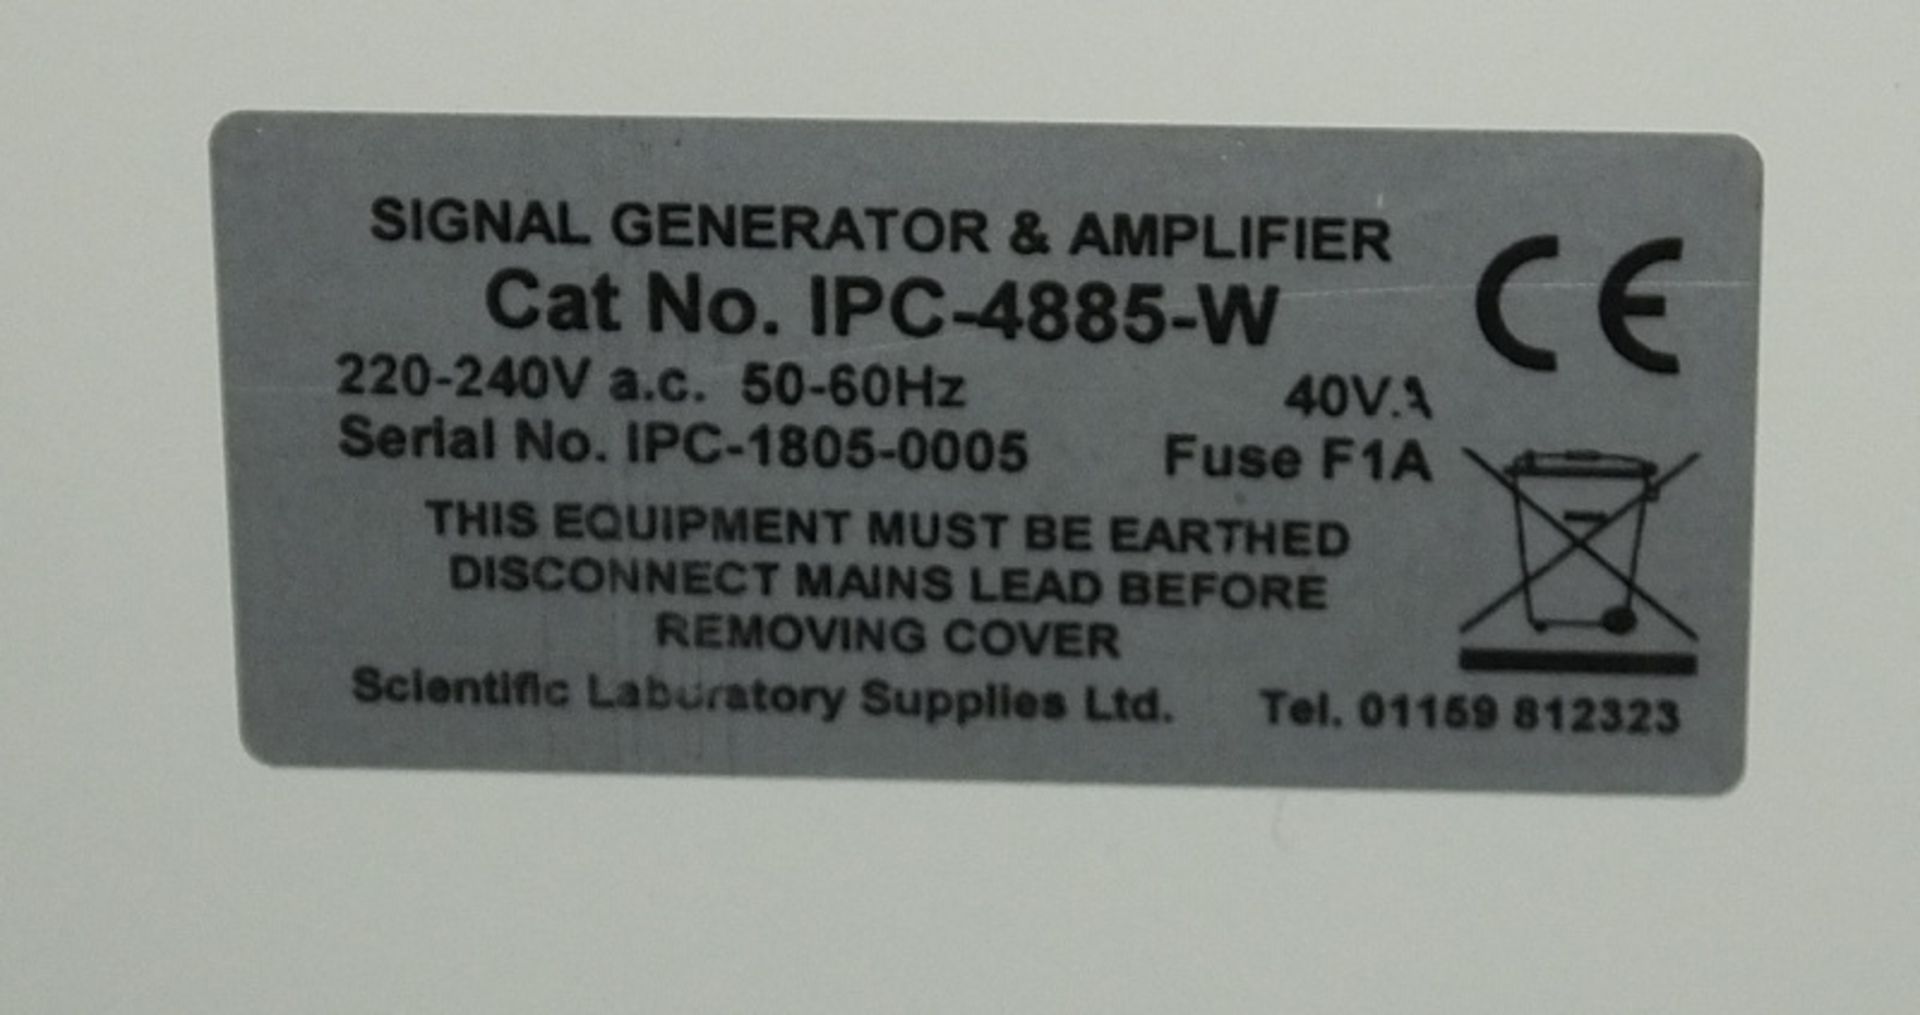 IPC-4885-W Signal Generator & Amplifier Unit - Image 3 of 3